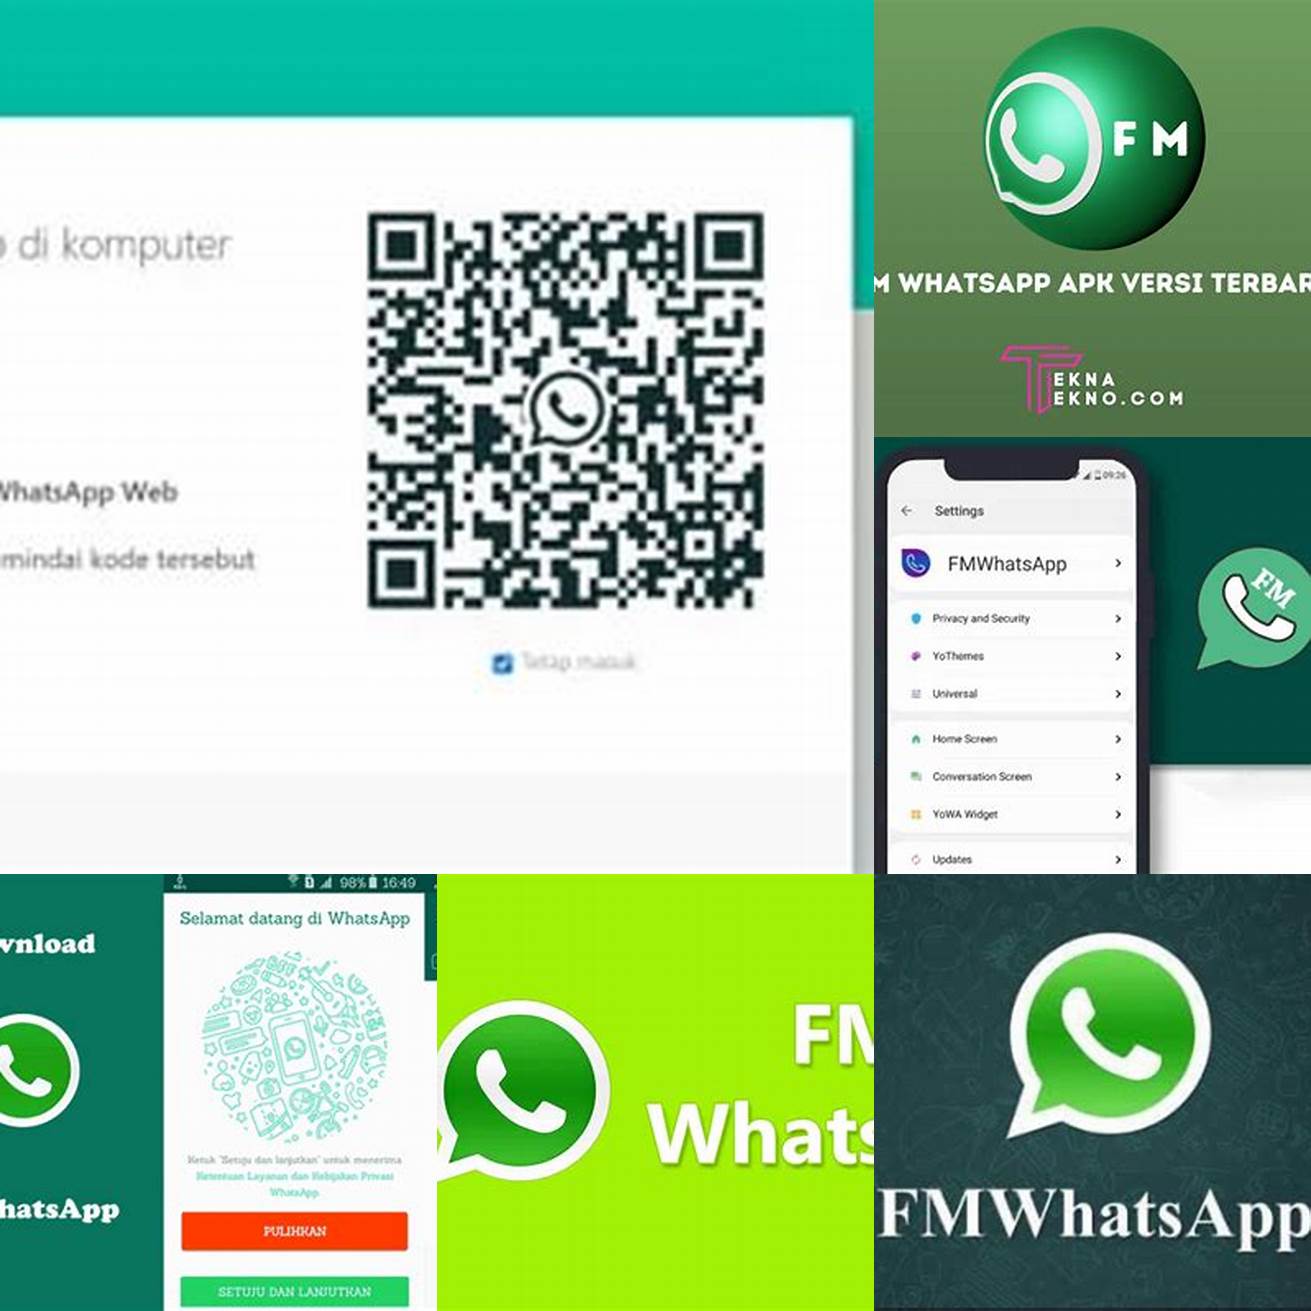 Langkah 2 Kunjungi situs web resmi FM WhatsApp